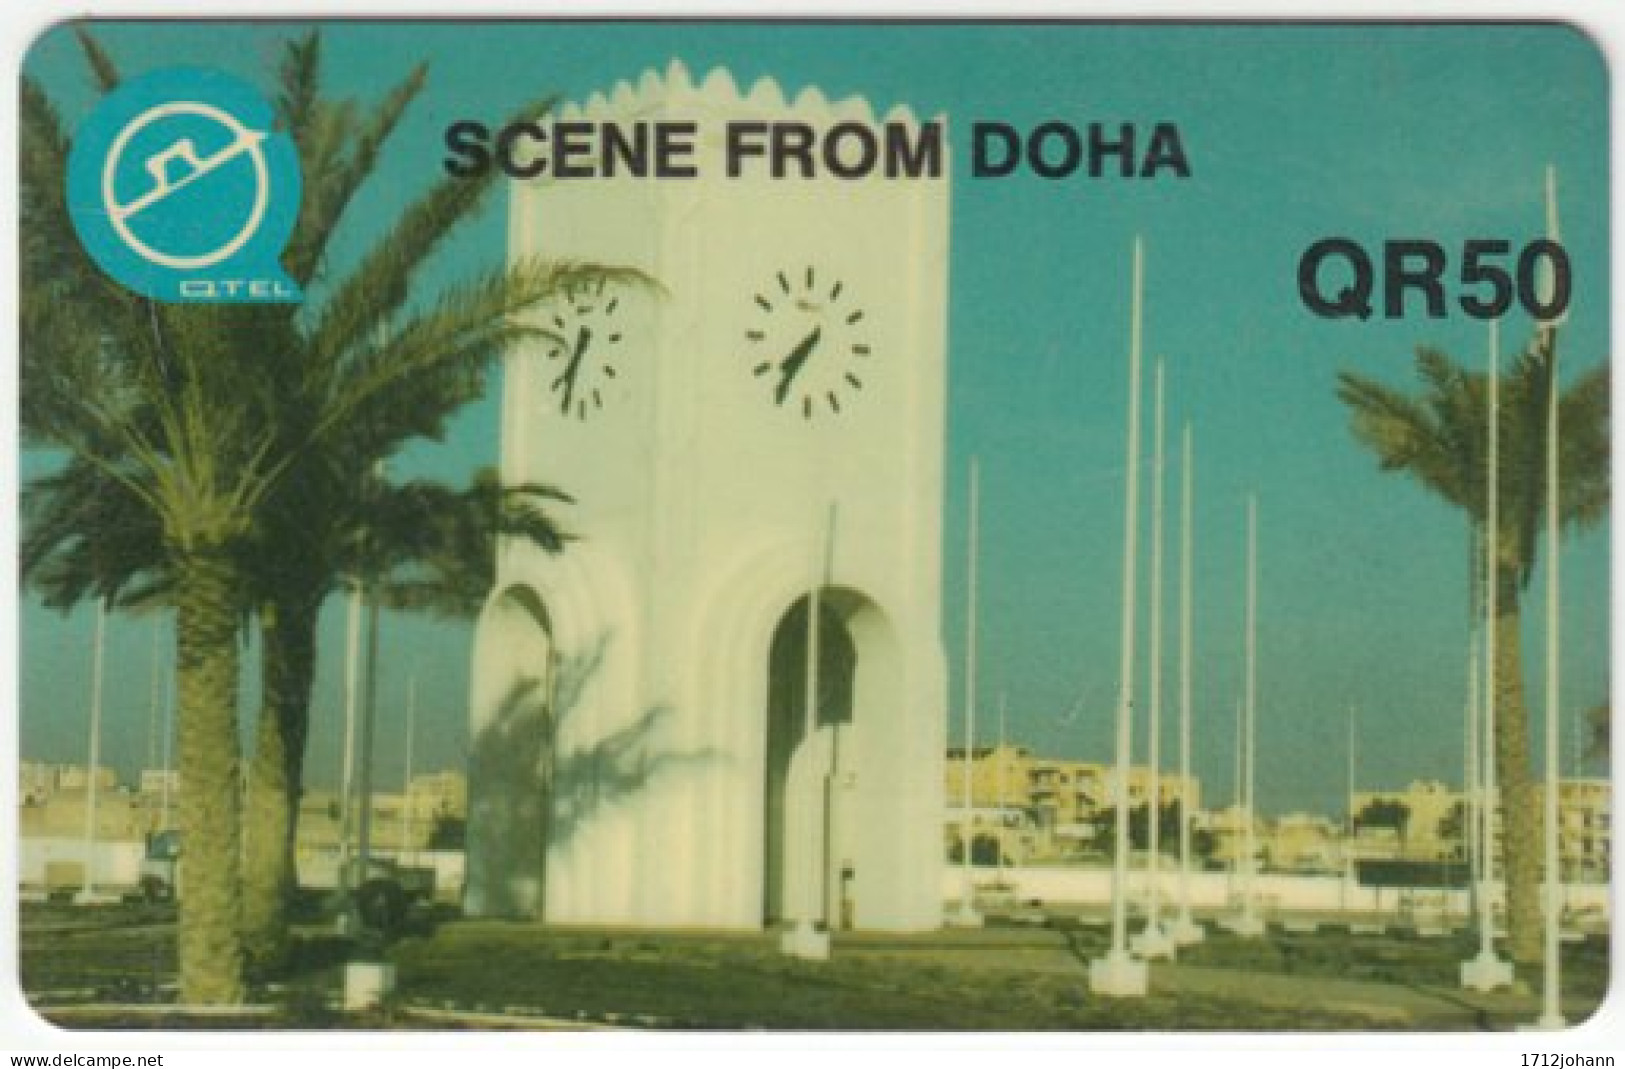 QATAR A-111 Magnetic - View, Clocktower - Used - Qatar